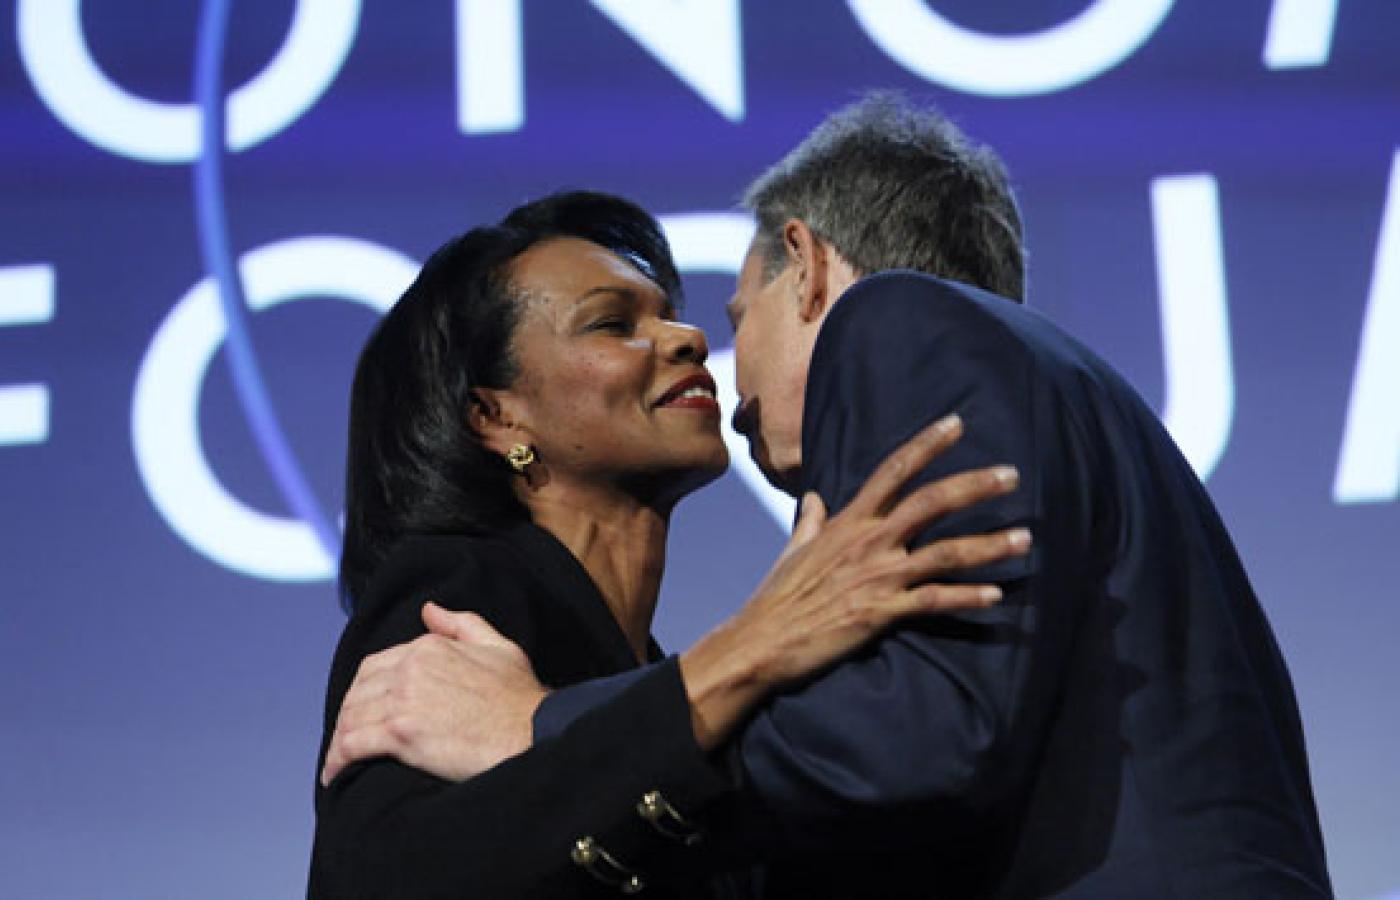 Condoleezza Rice i Tony Blair, Fot. Richard Kalvar, World Economic Forum, Flickr, CC by SA